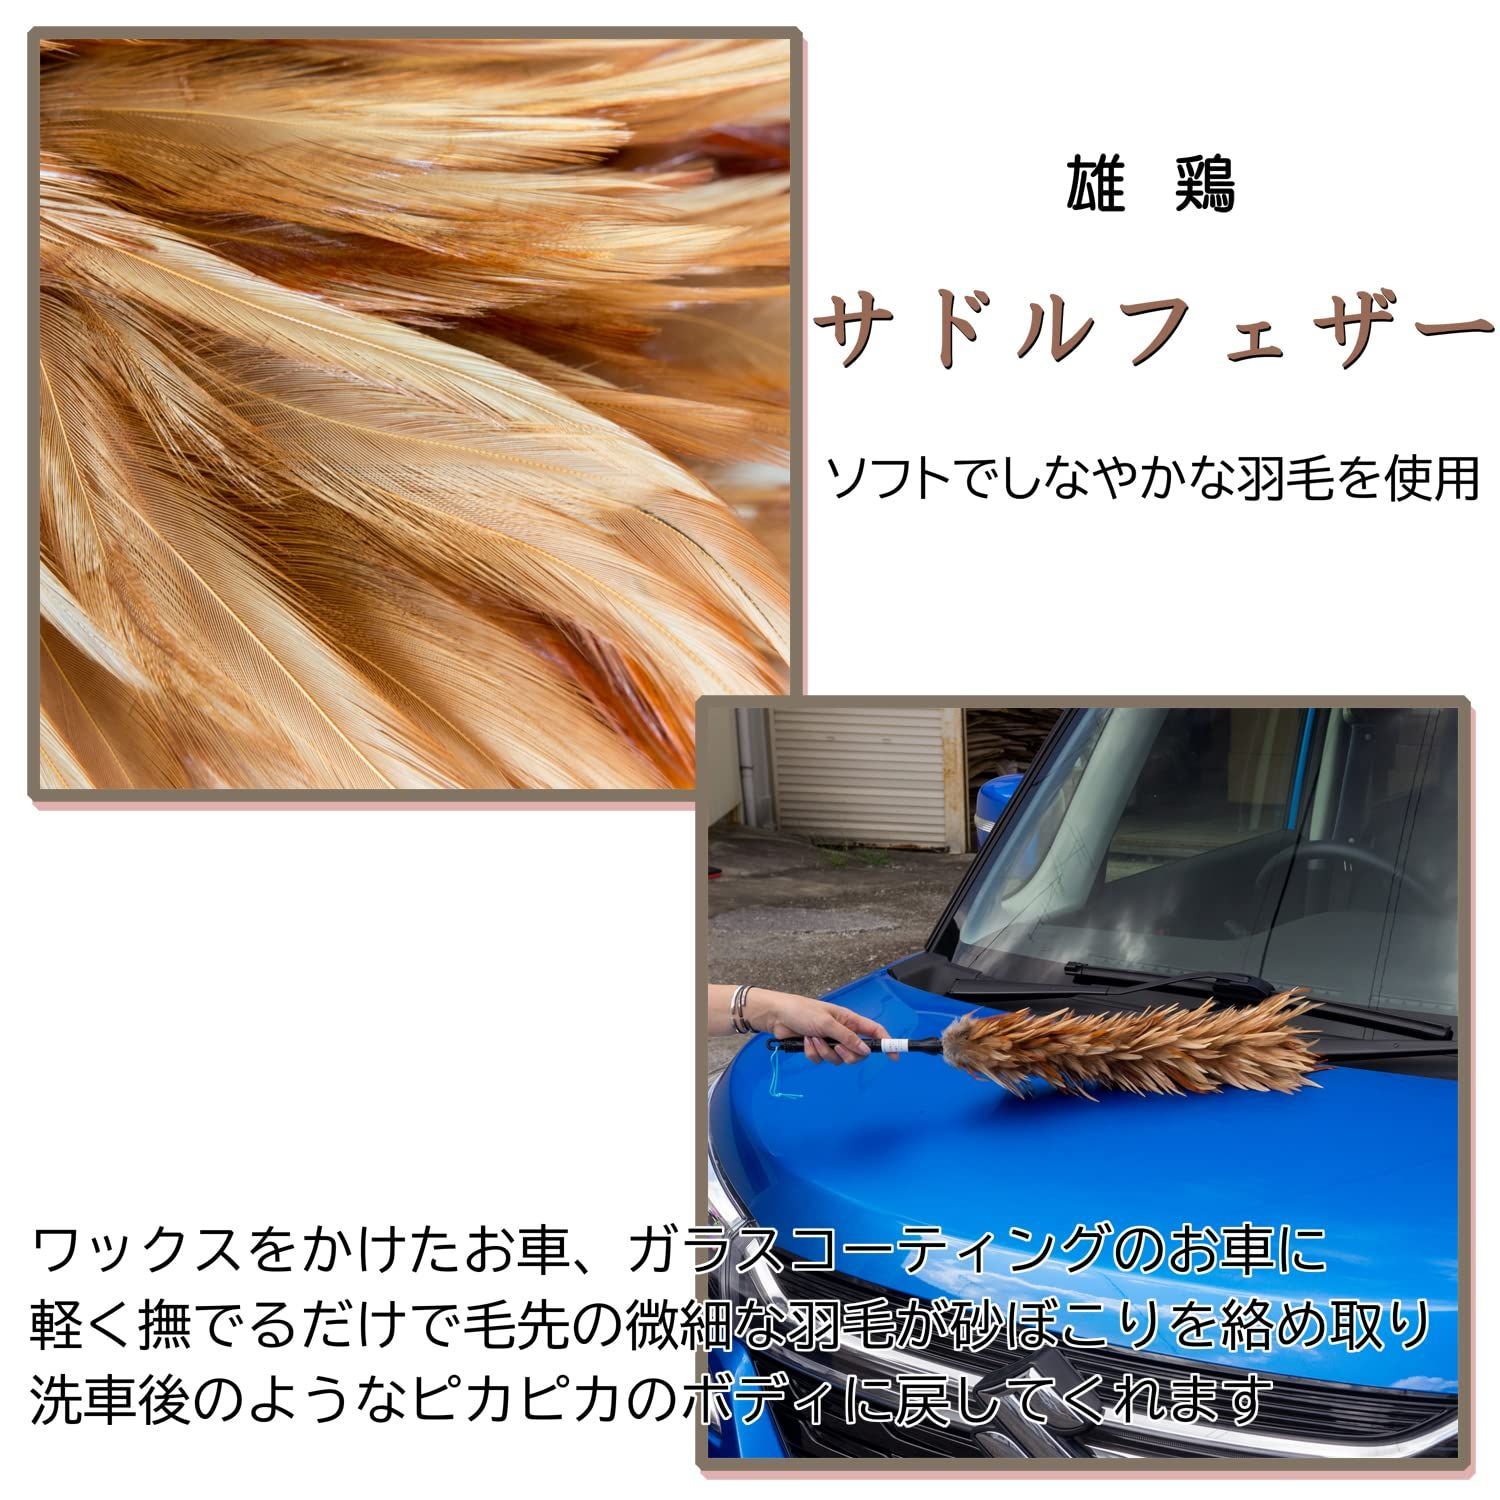 ESCI 日本製最高級の手造り毛ばたき ソフトで艶やかな鶏毛の女王「茶黒